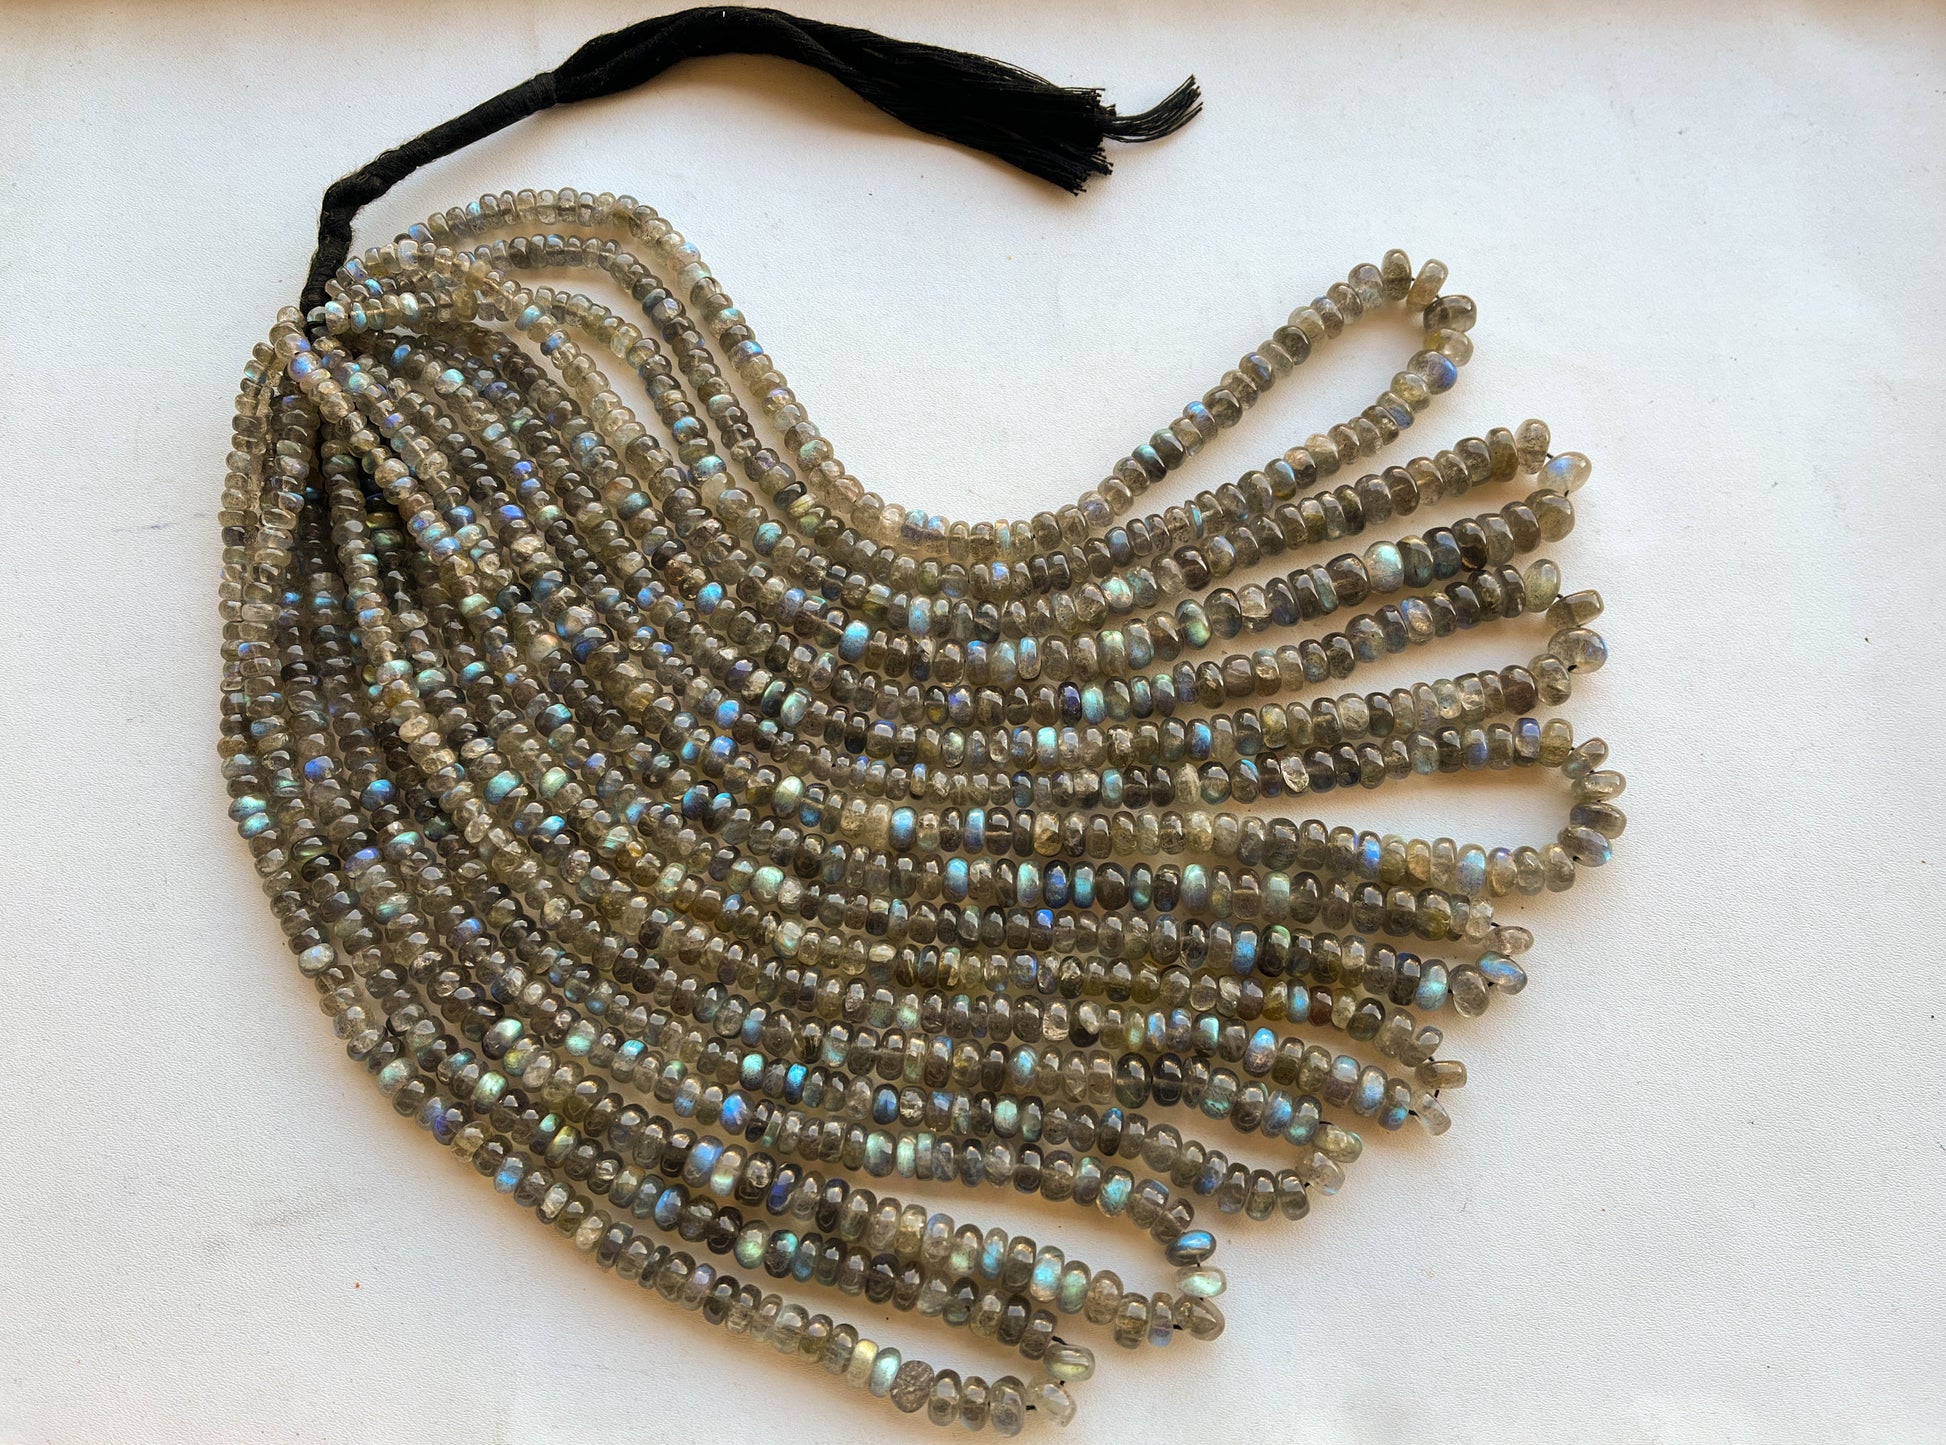 Labradorite Rondelle Beads, Labradorite Beads, Labradorite Smooth Rondelle Beads, Natural Labradorite Gemstone beads for jewelry Beadsforyourjewelry